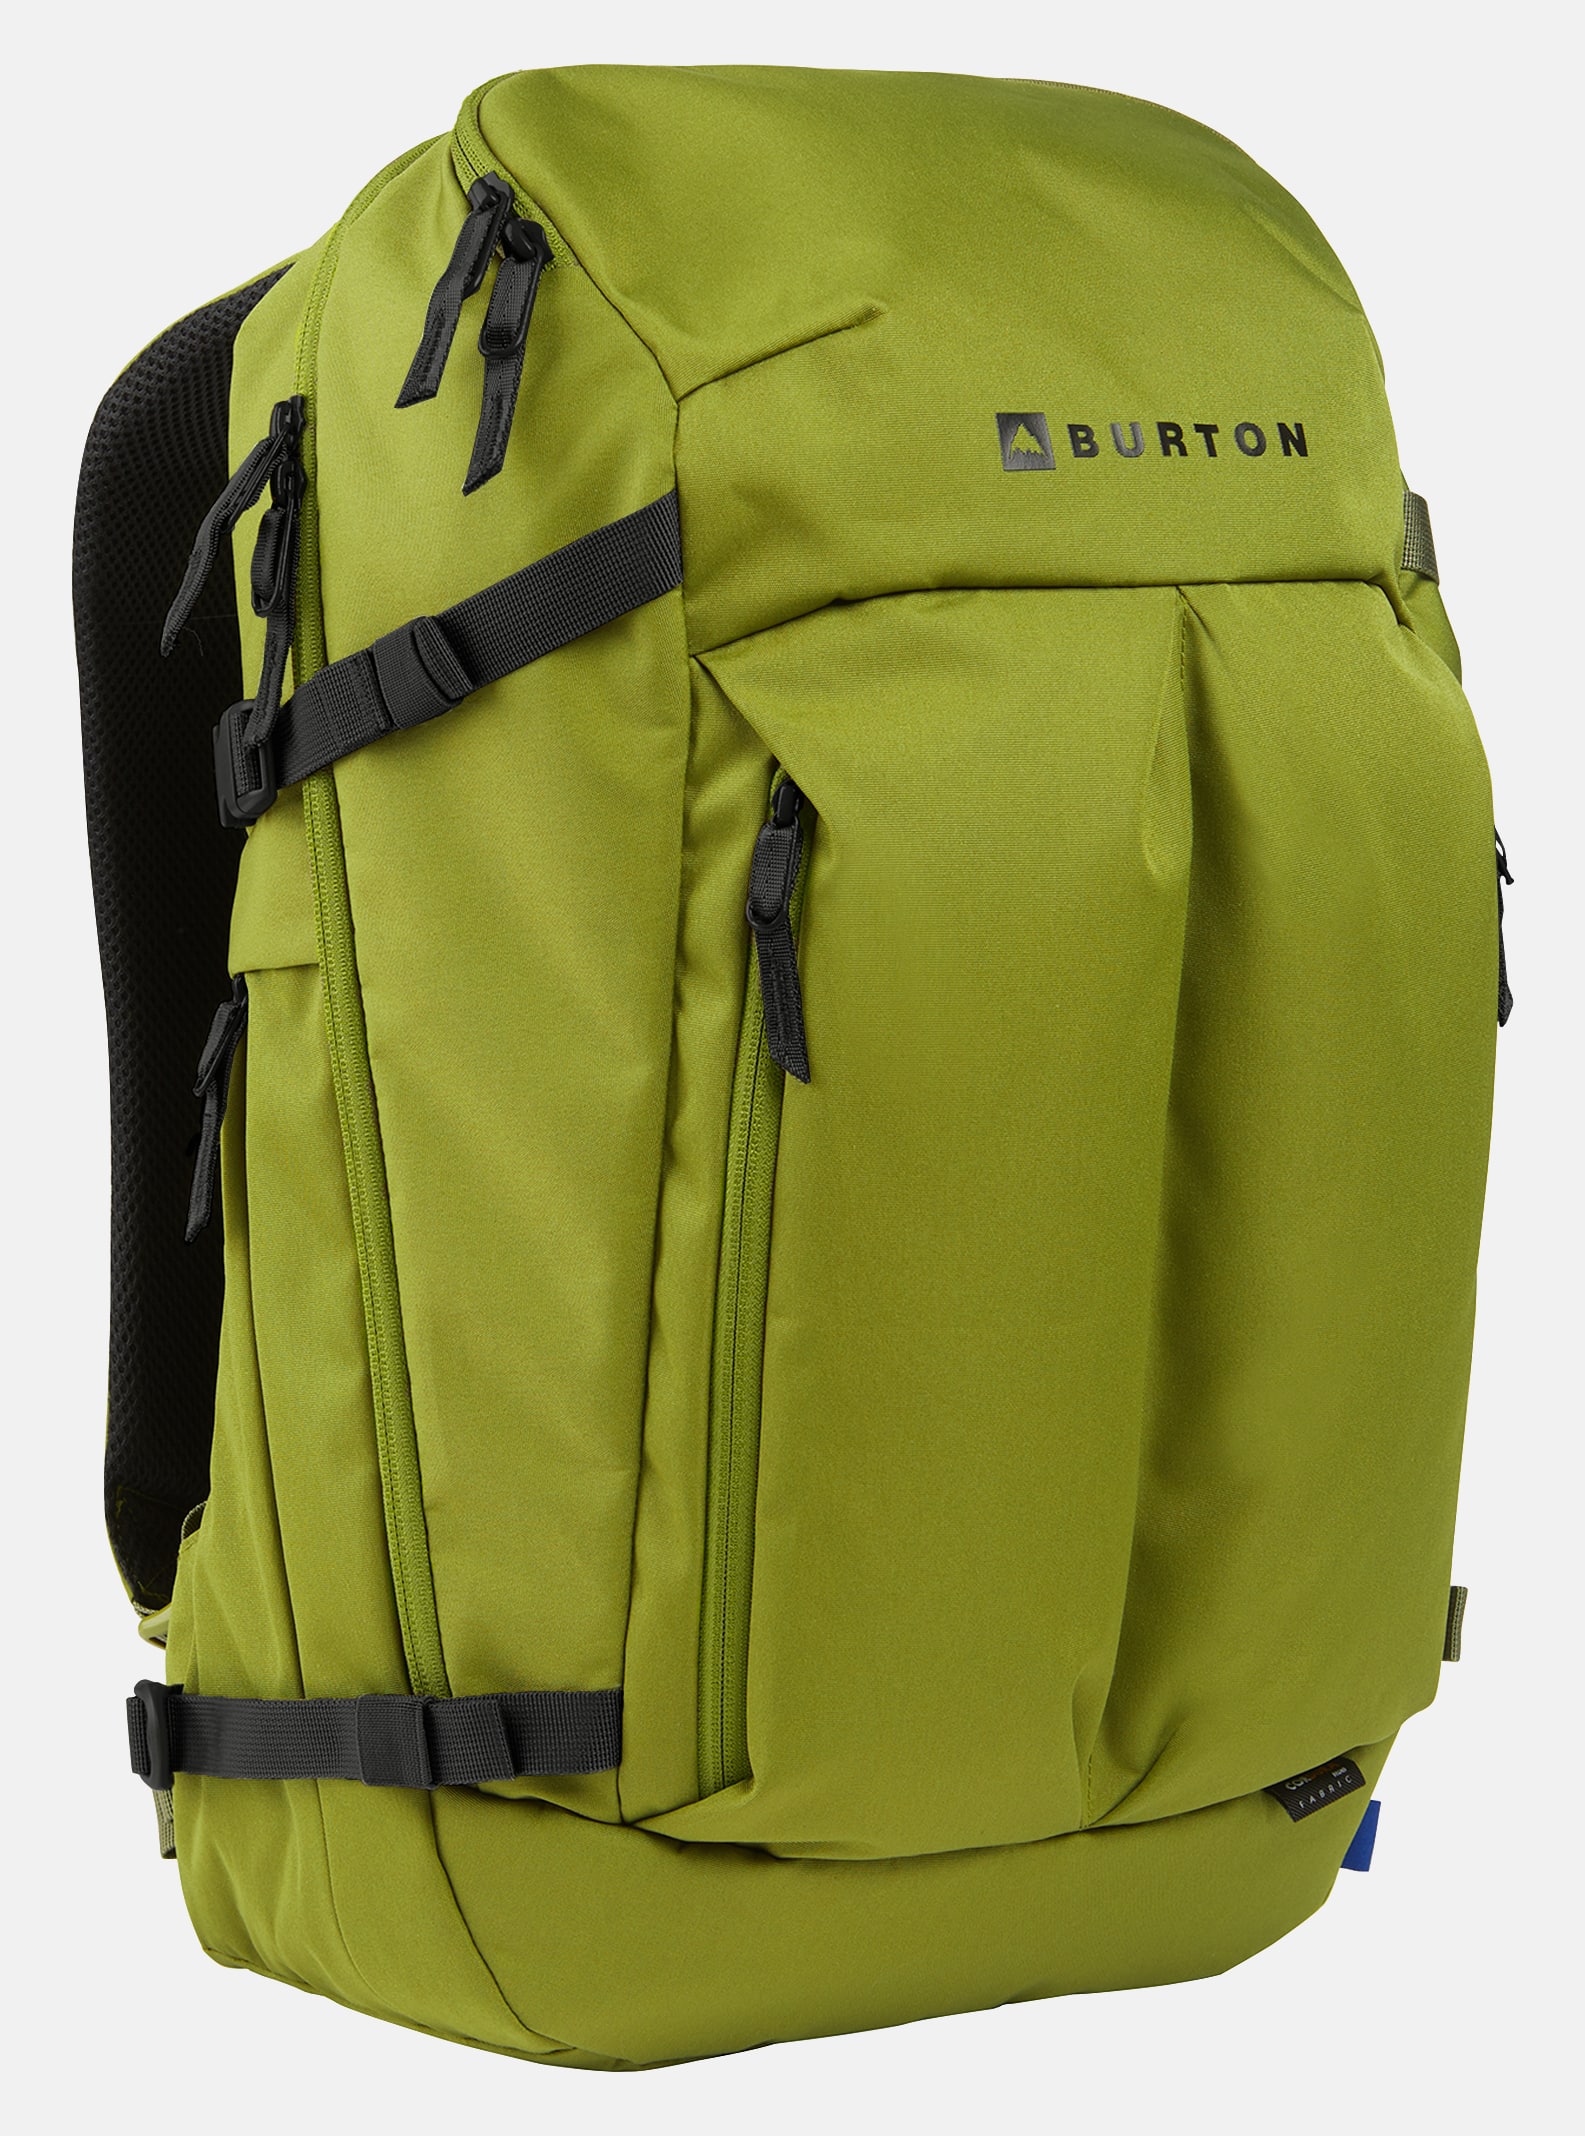 Outdoor & Snowboard Backpacks | Burton Snowboards ES